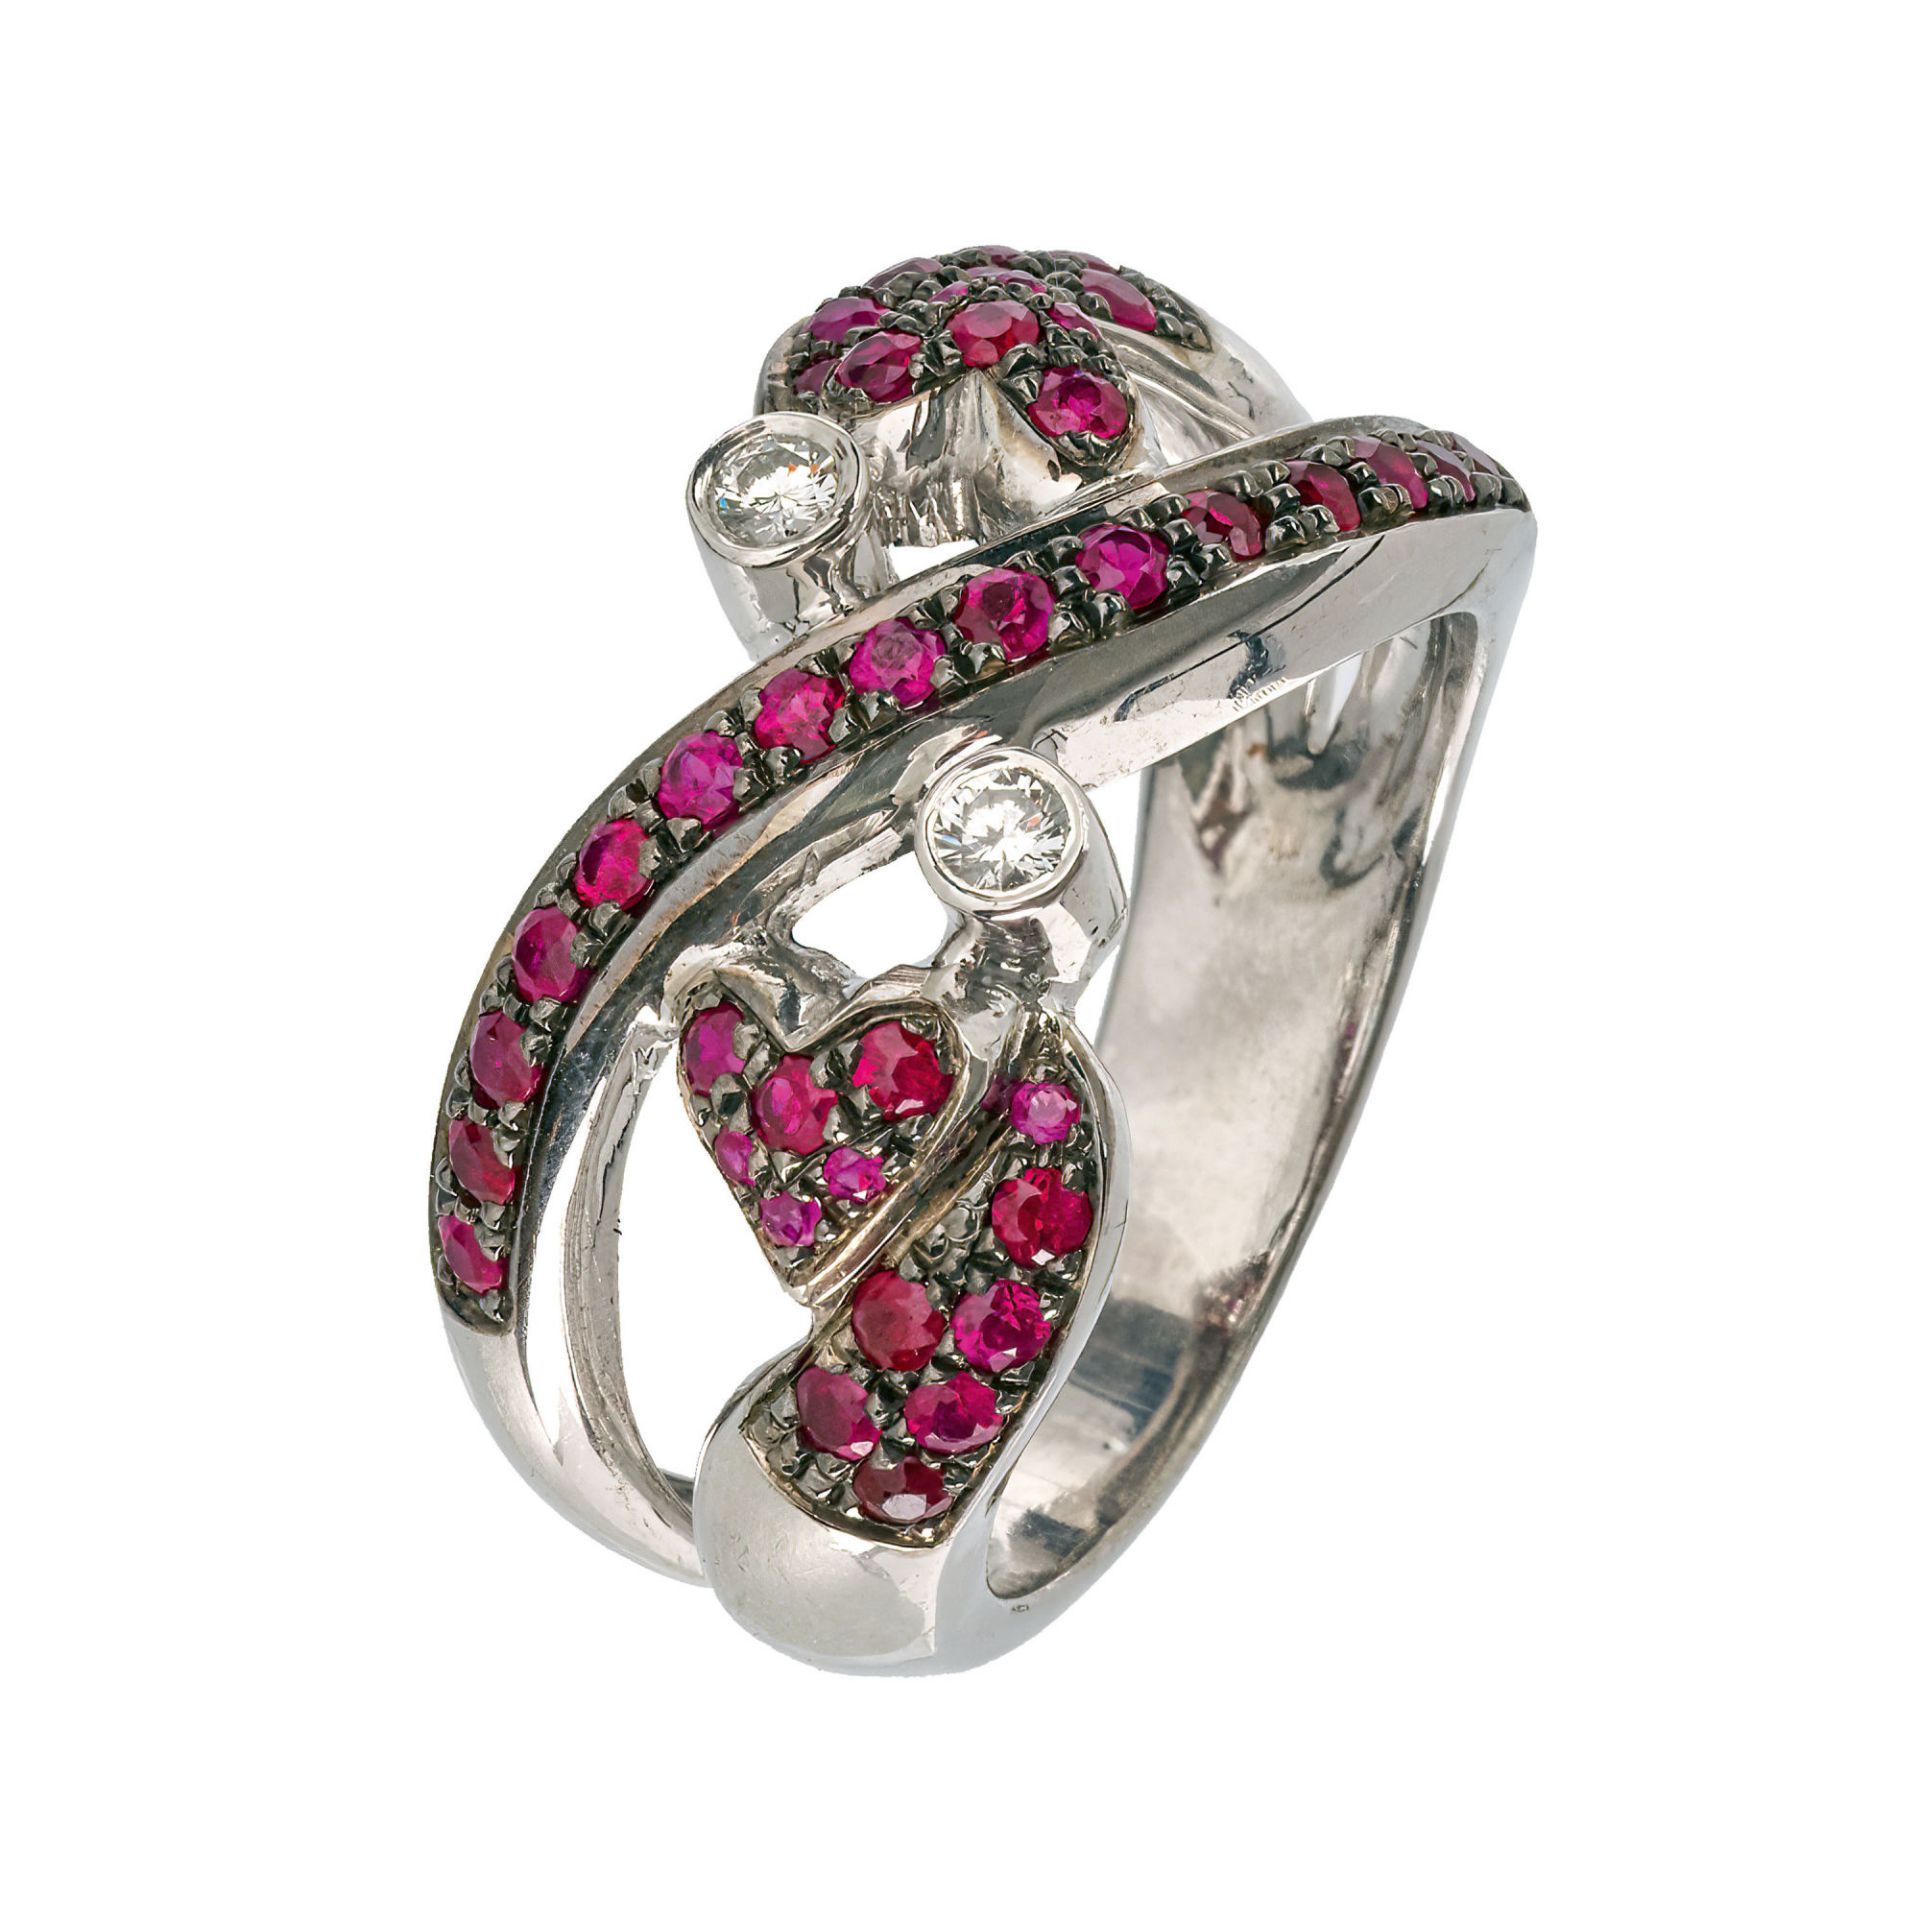 RUBIN-DIAMANT-RING / Ruby-diamond-ring 